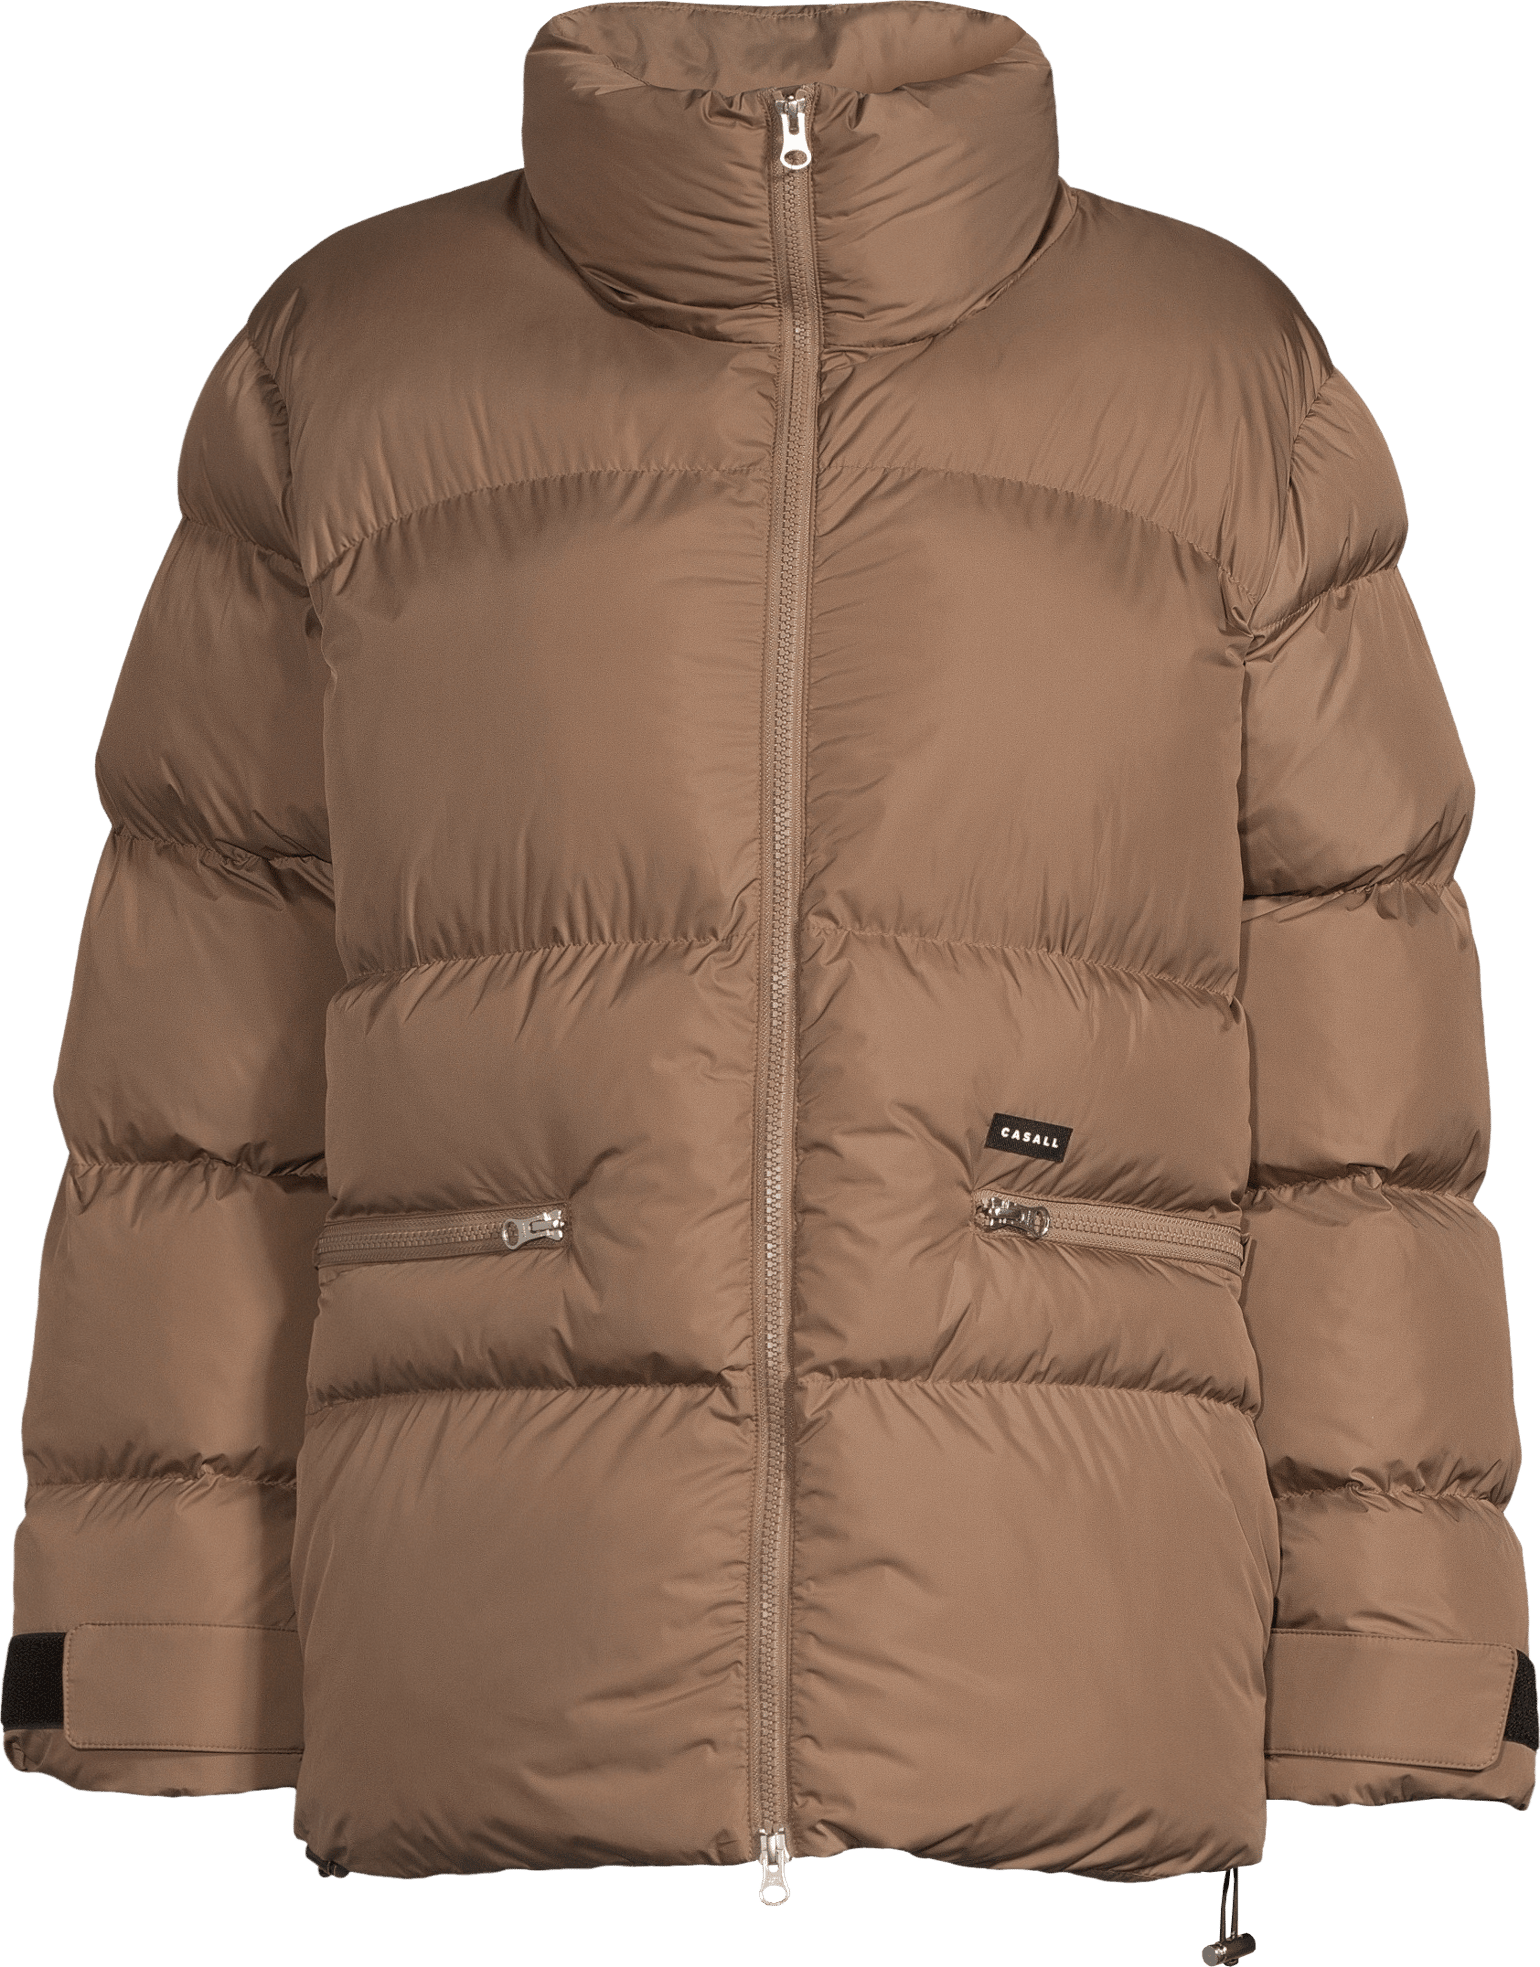 Casall Women's Hero Puffer Jacket Taupe Brown